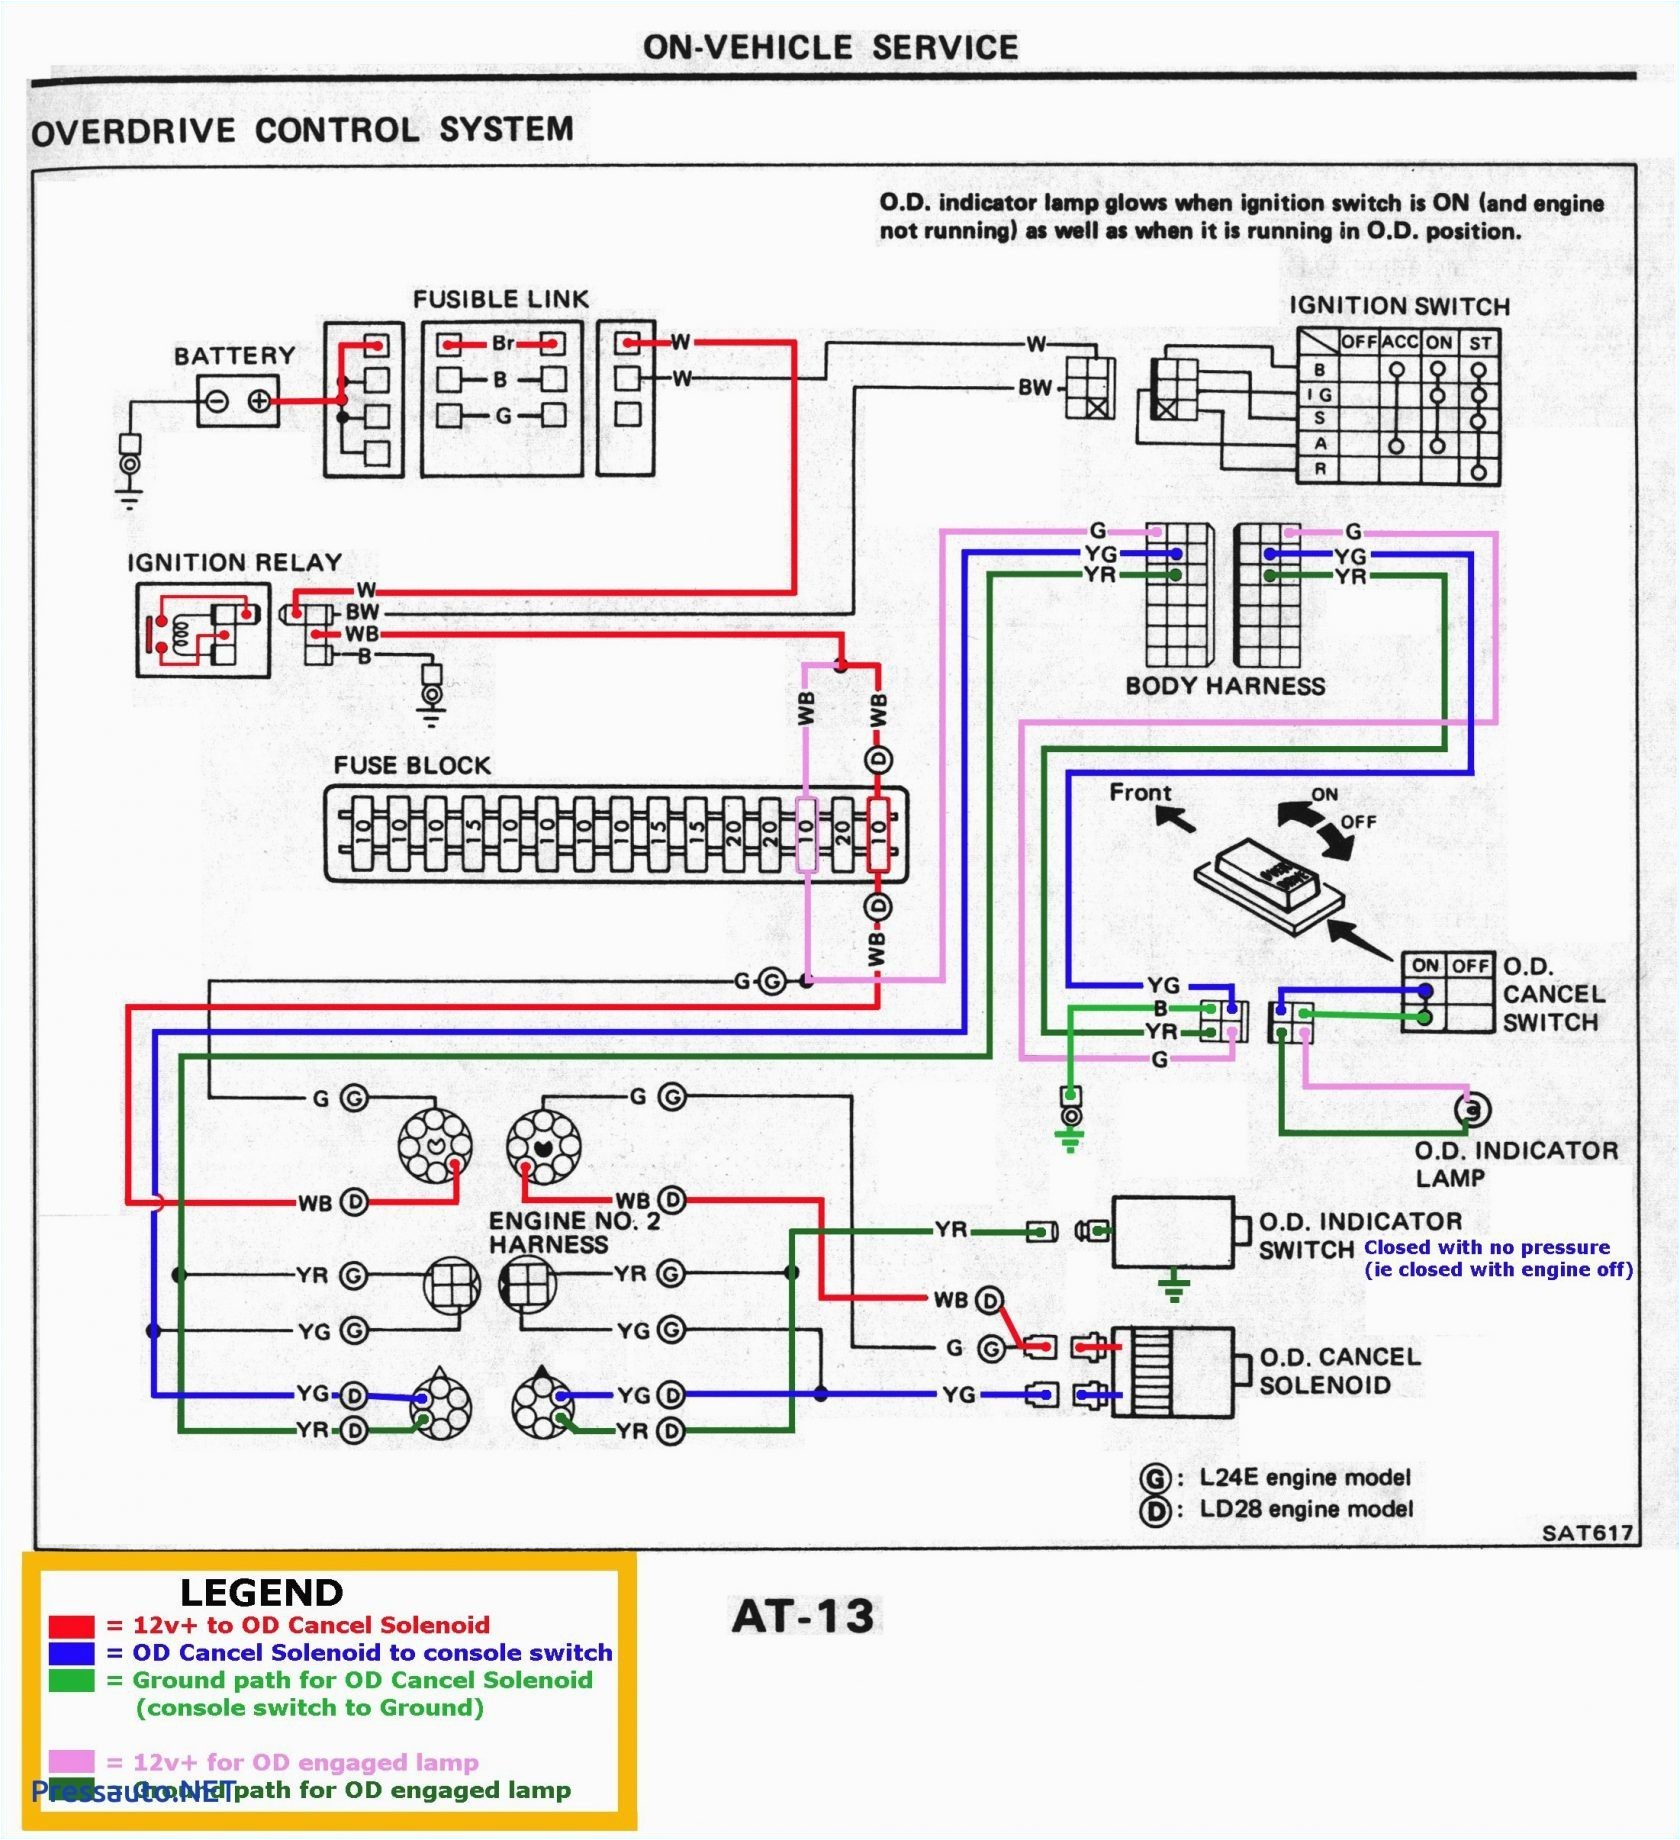 cctv wiring diagram